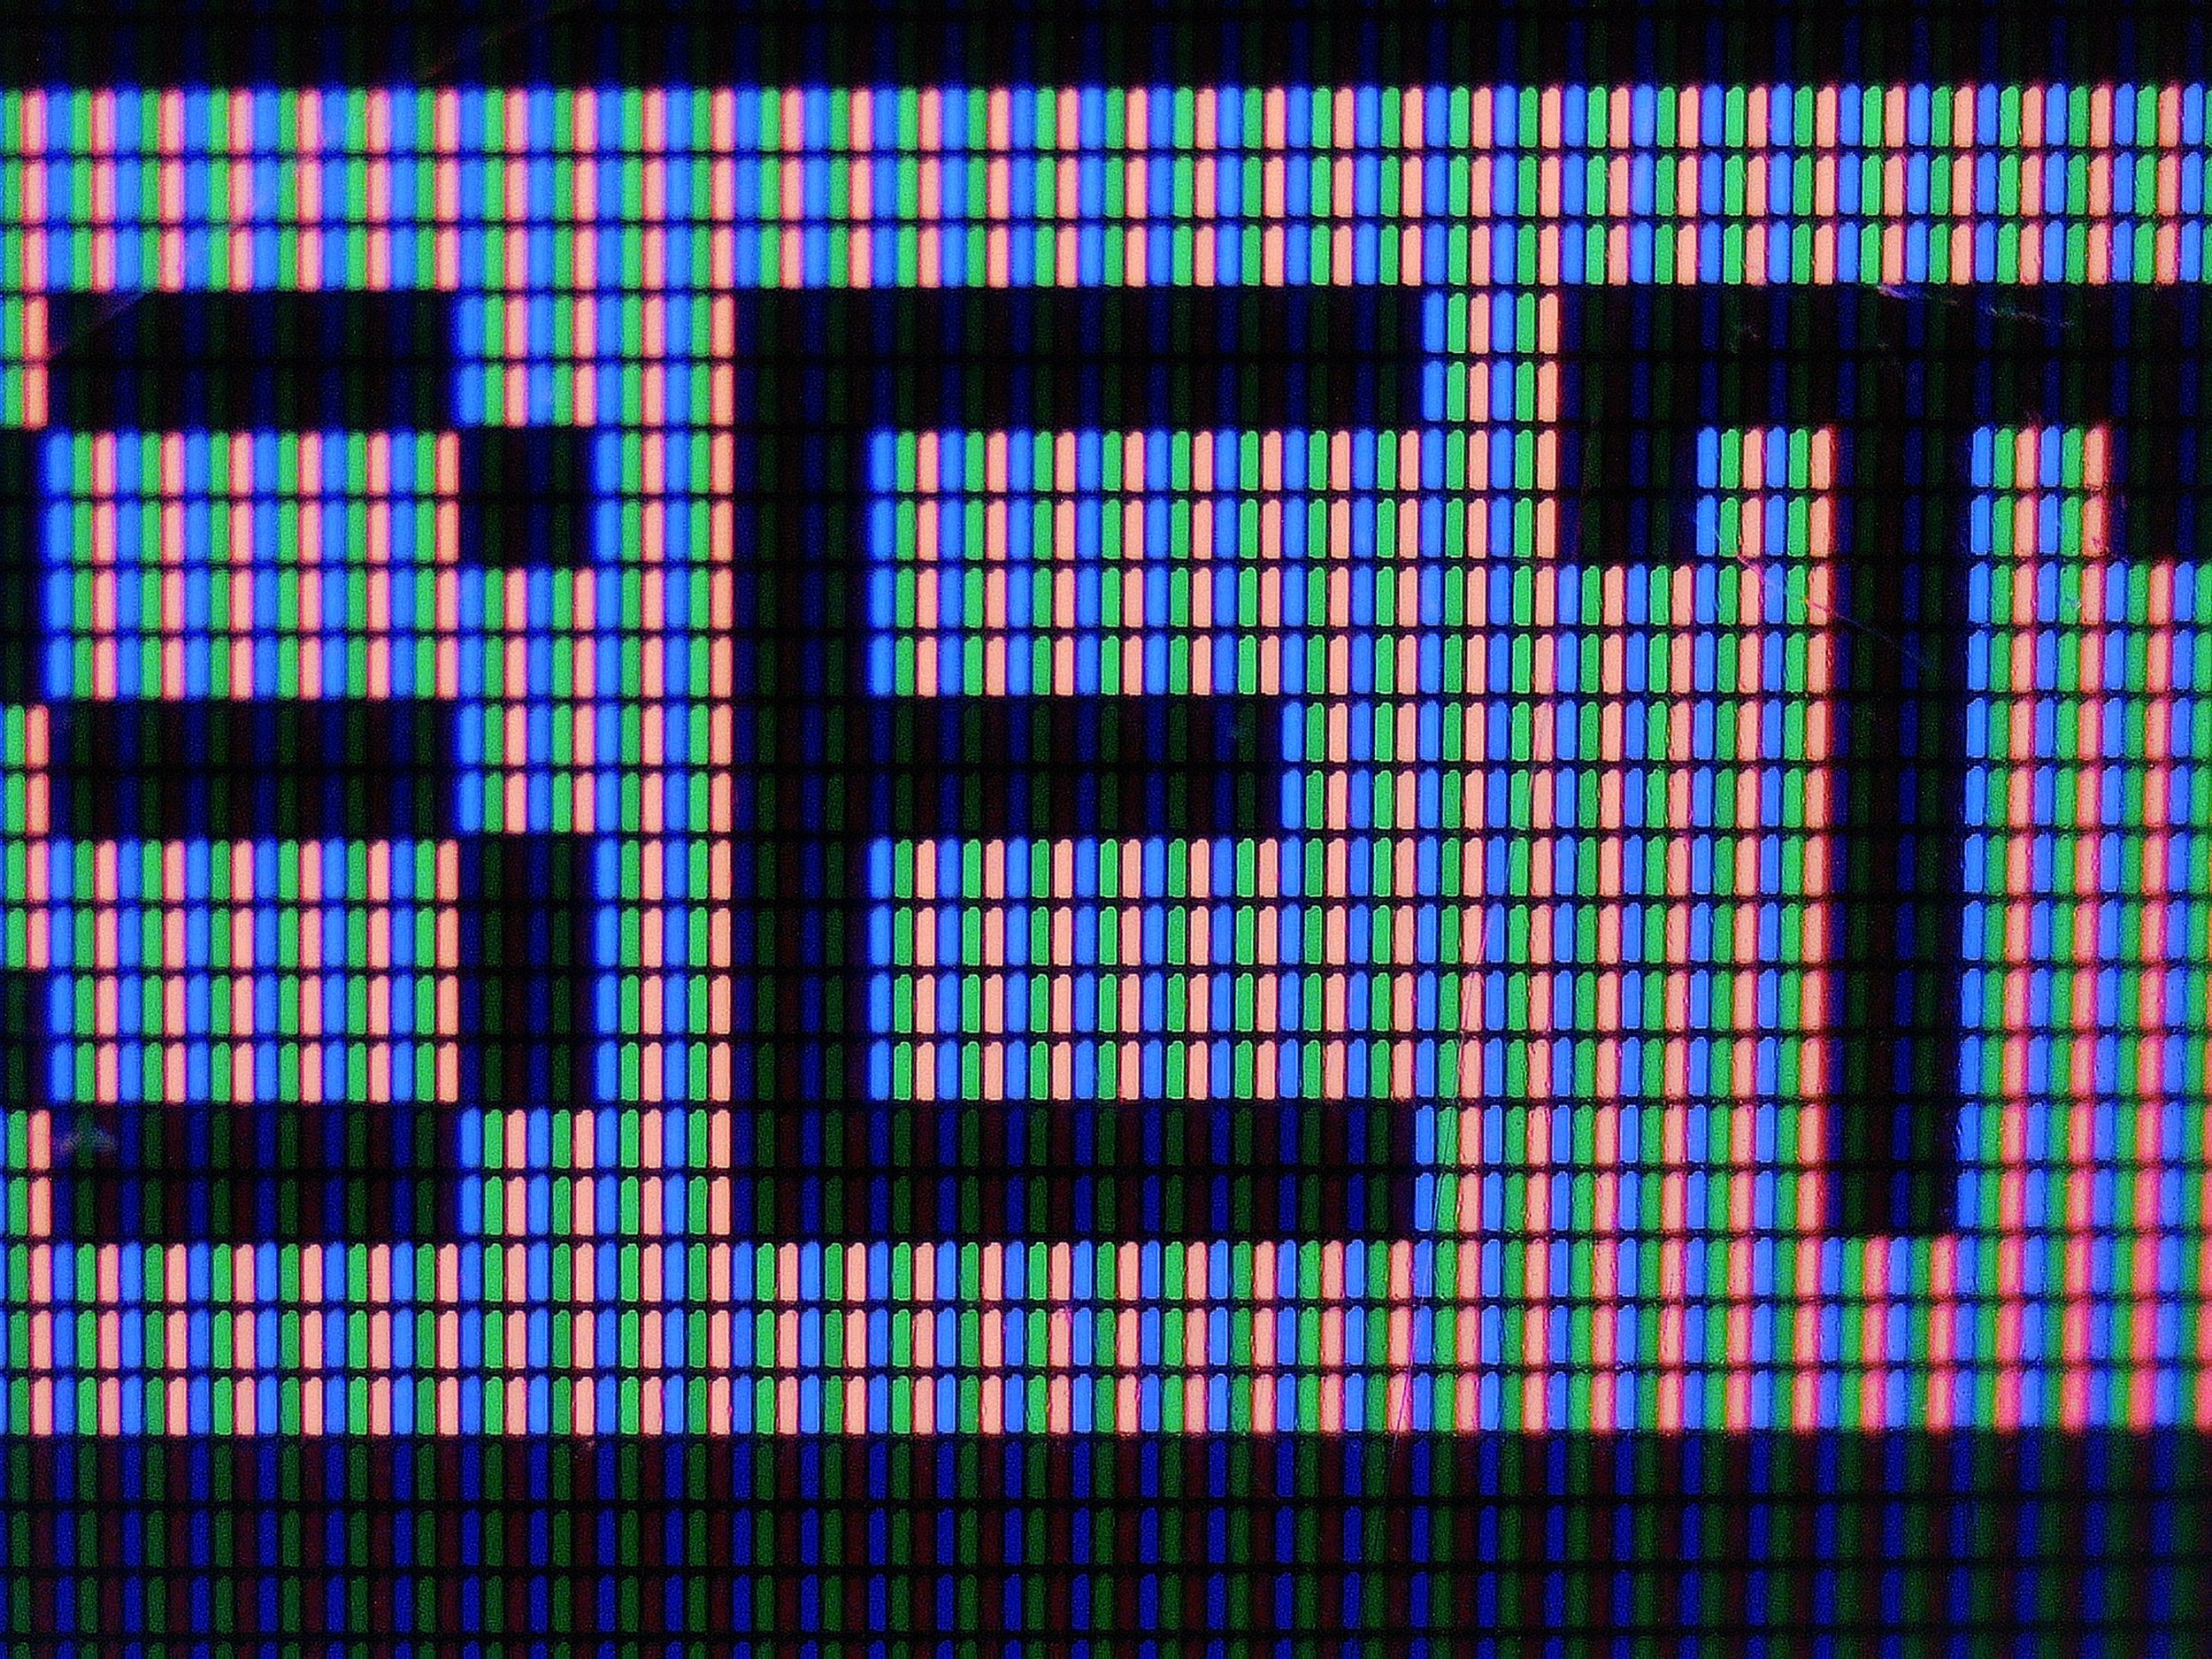 Pixels on a TFT LCD 